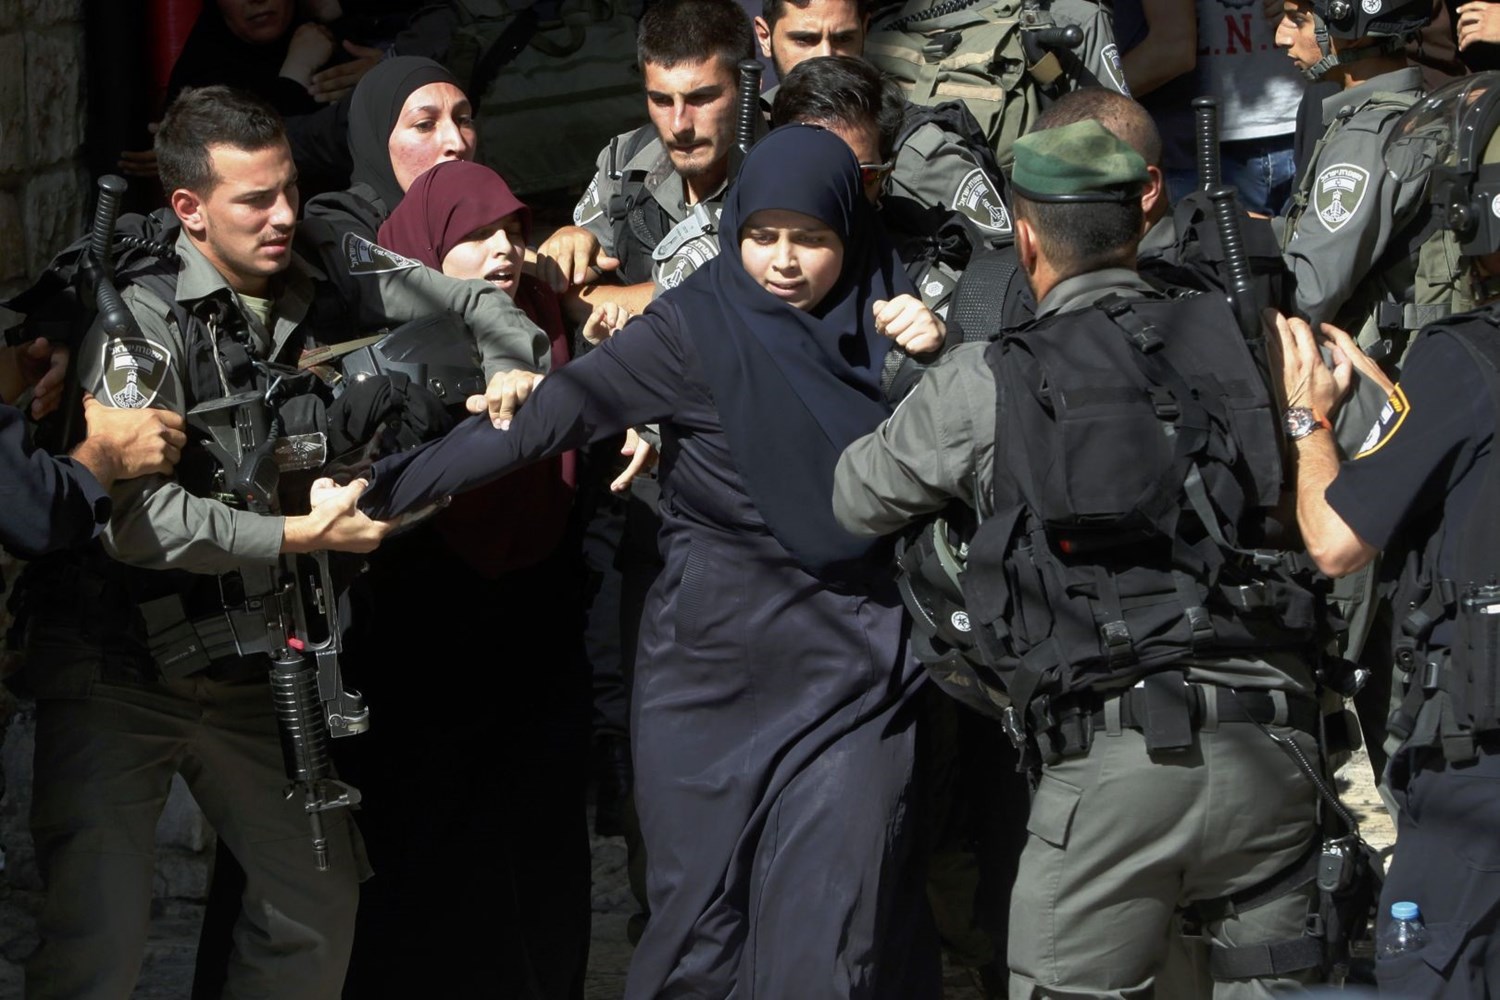 On International Women's Day: 35 female prisoners, including 11 mothers, behind Israeli bars